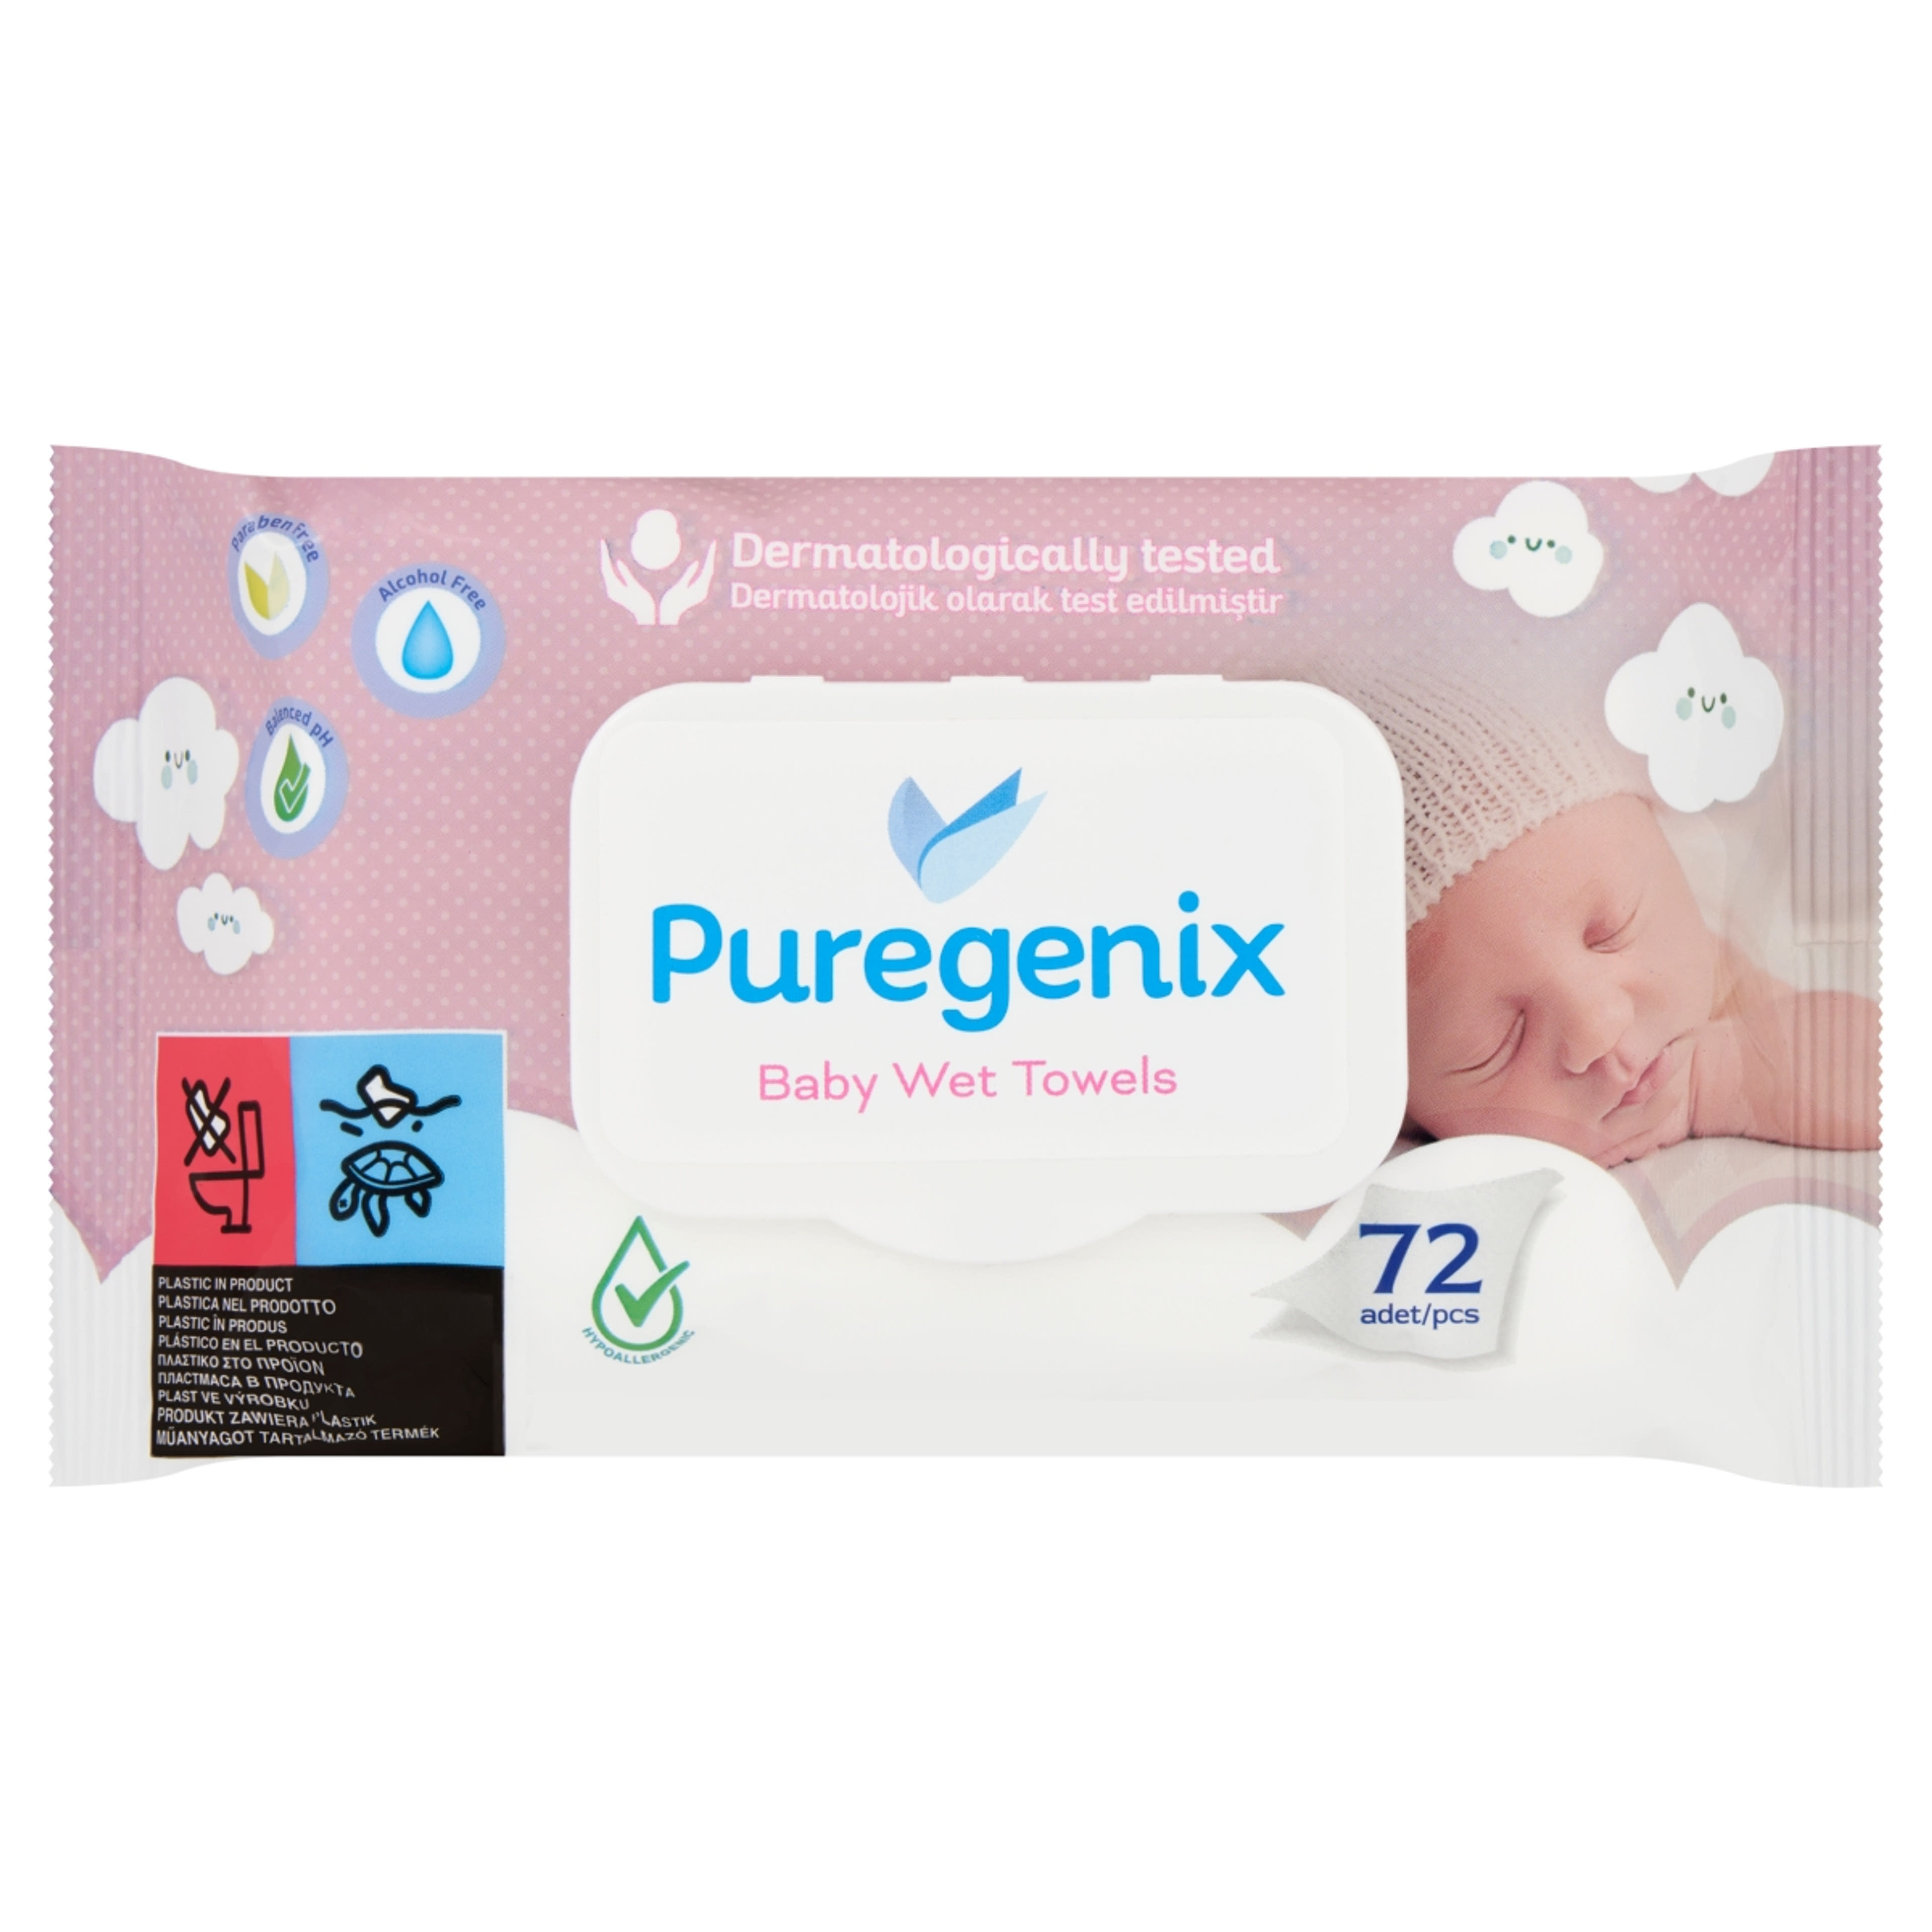 Puregenix nedveskendő - 72 db